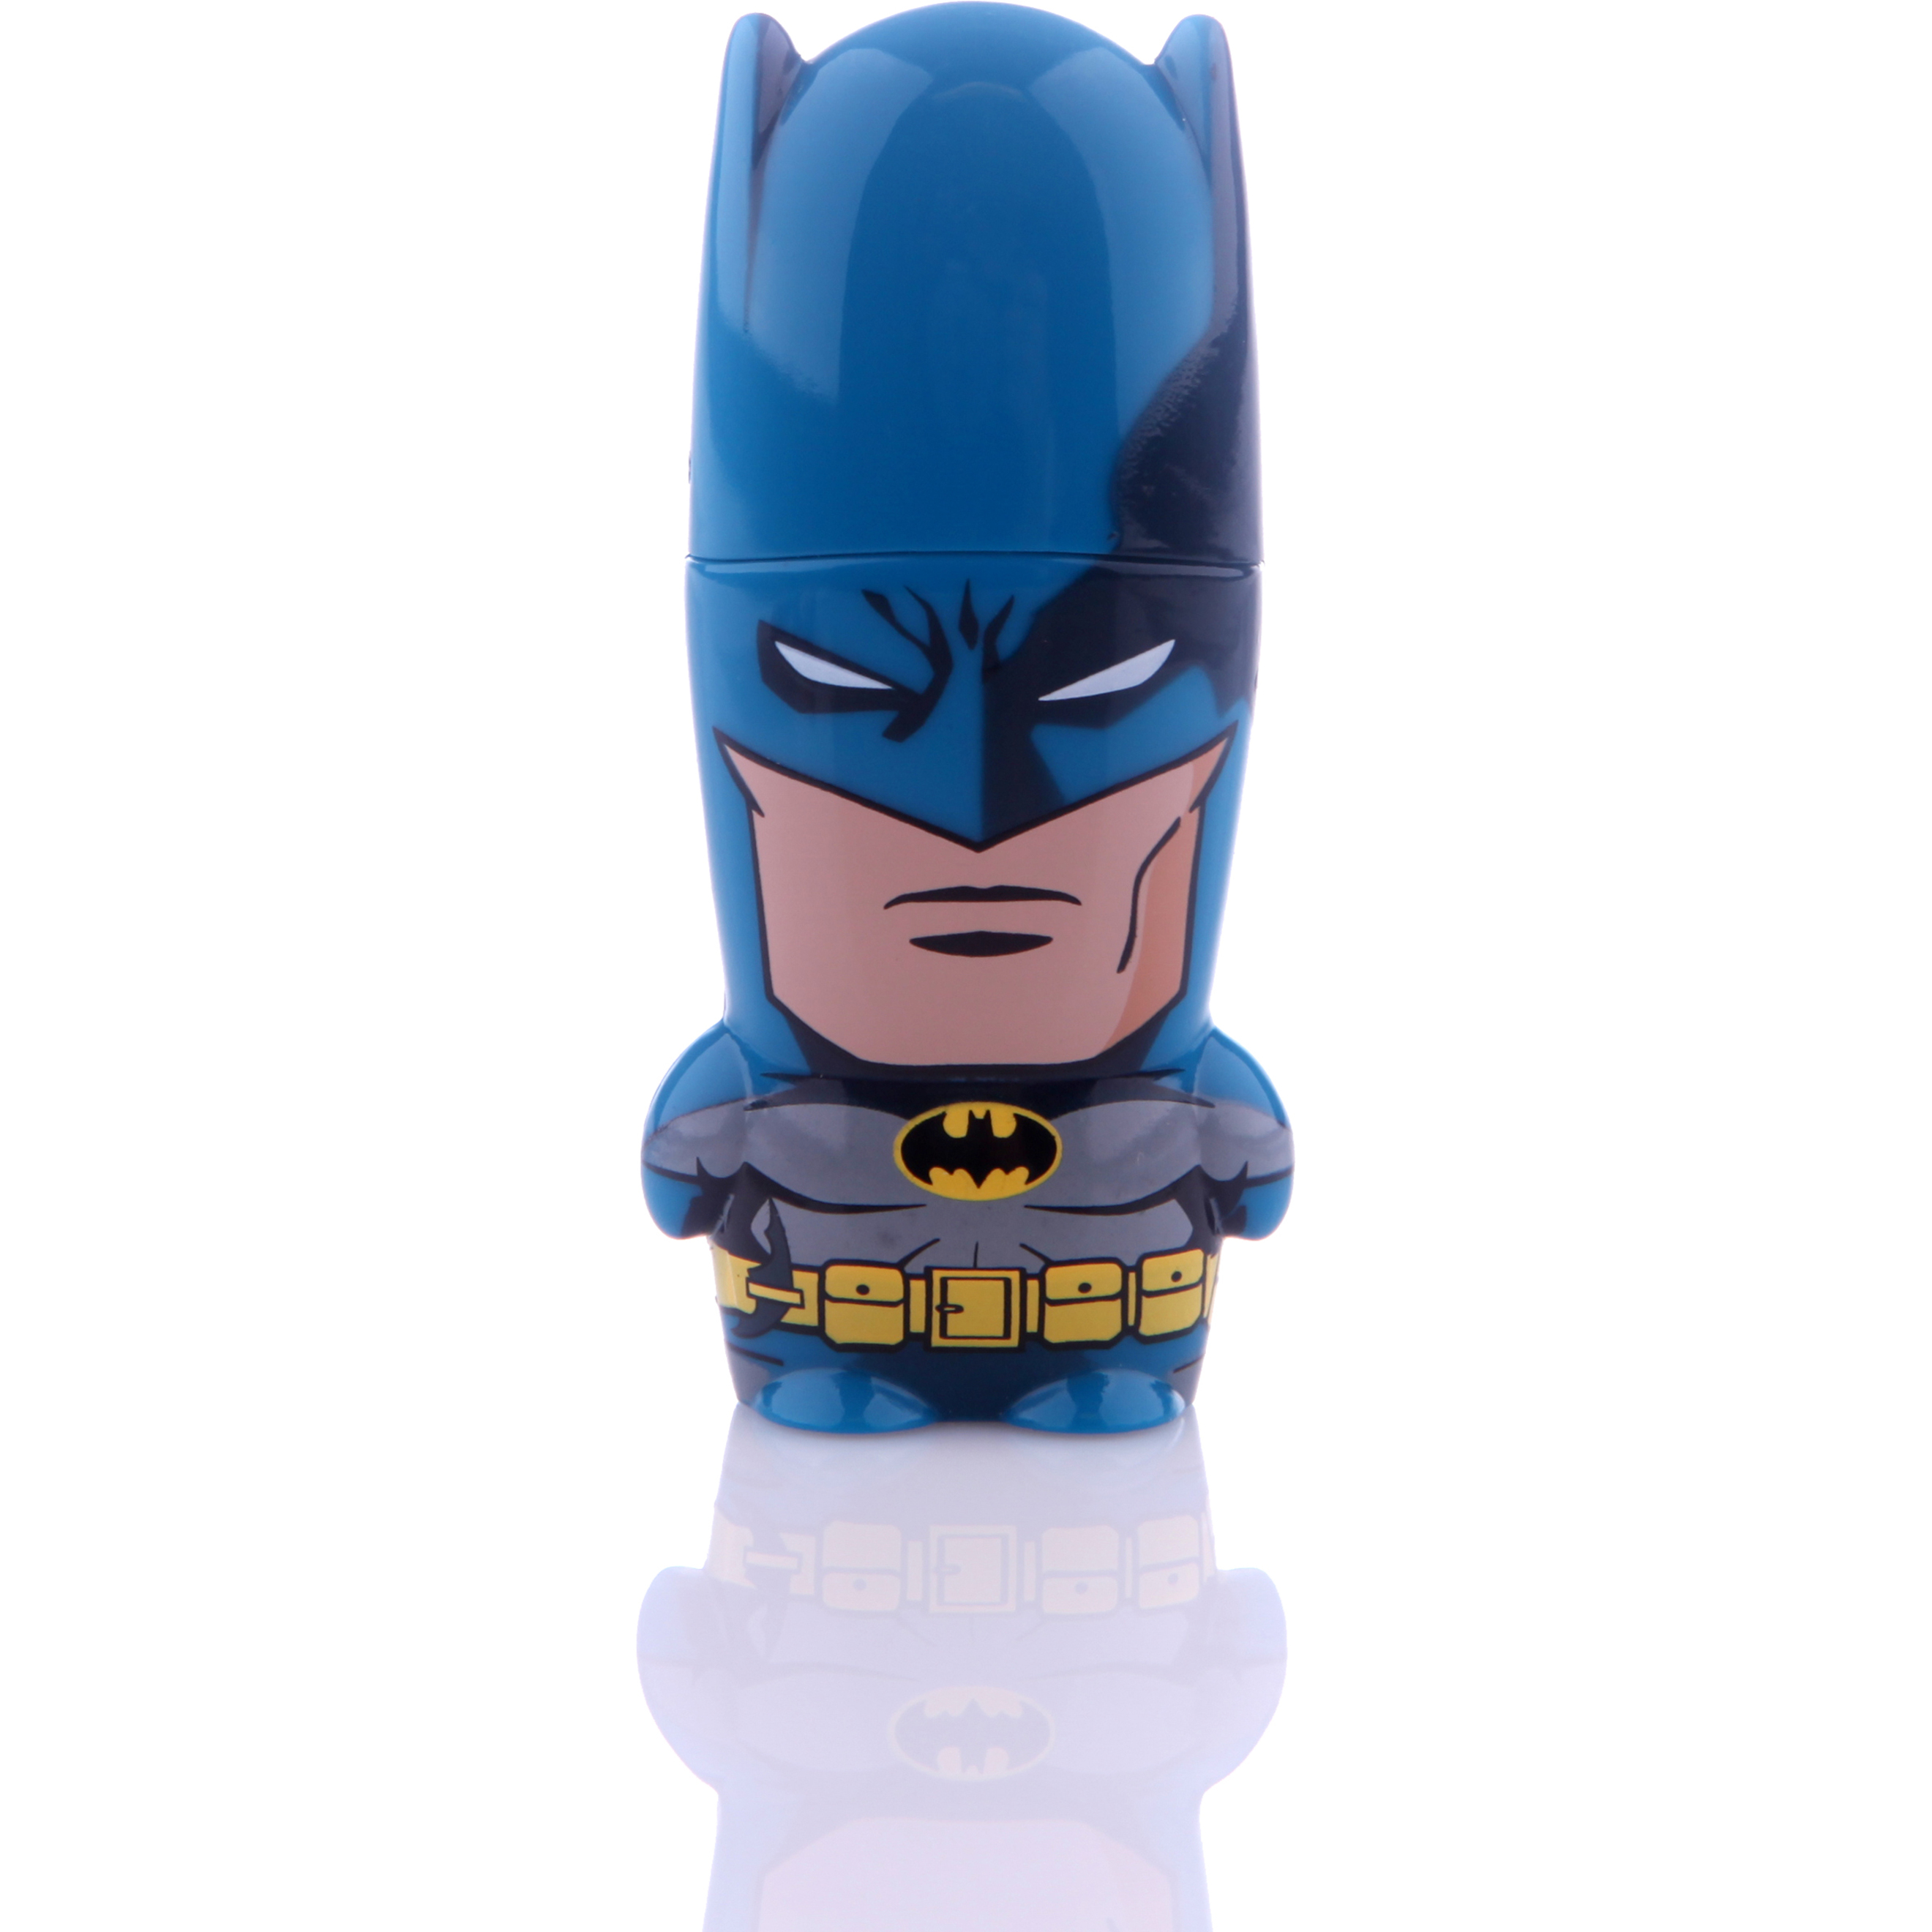 Mimoco 16GB MIMOBOT DC Comics USB  Flash Drive, Batman 